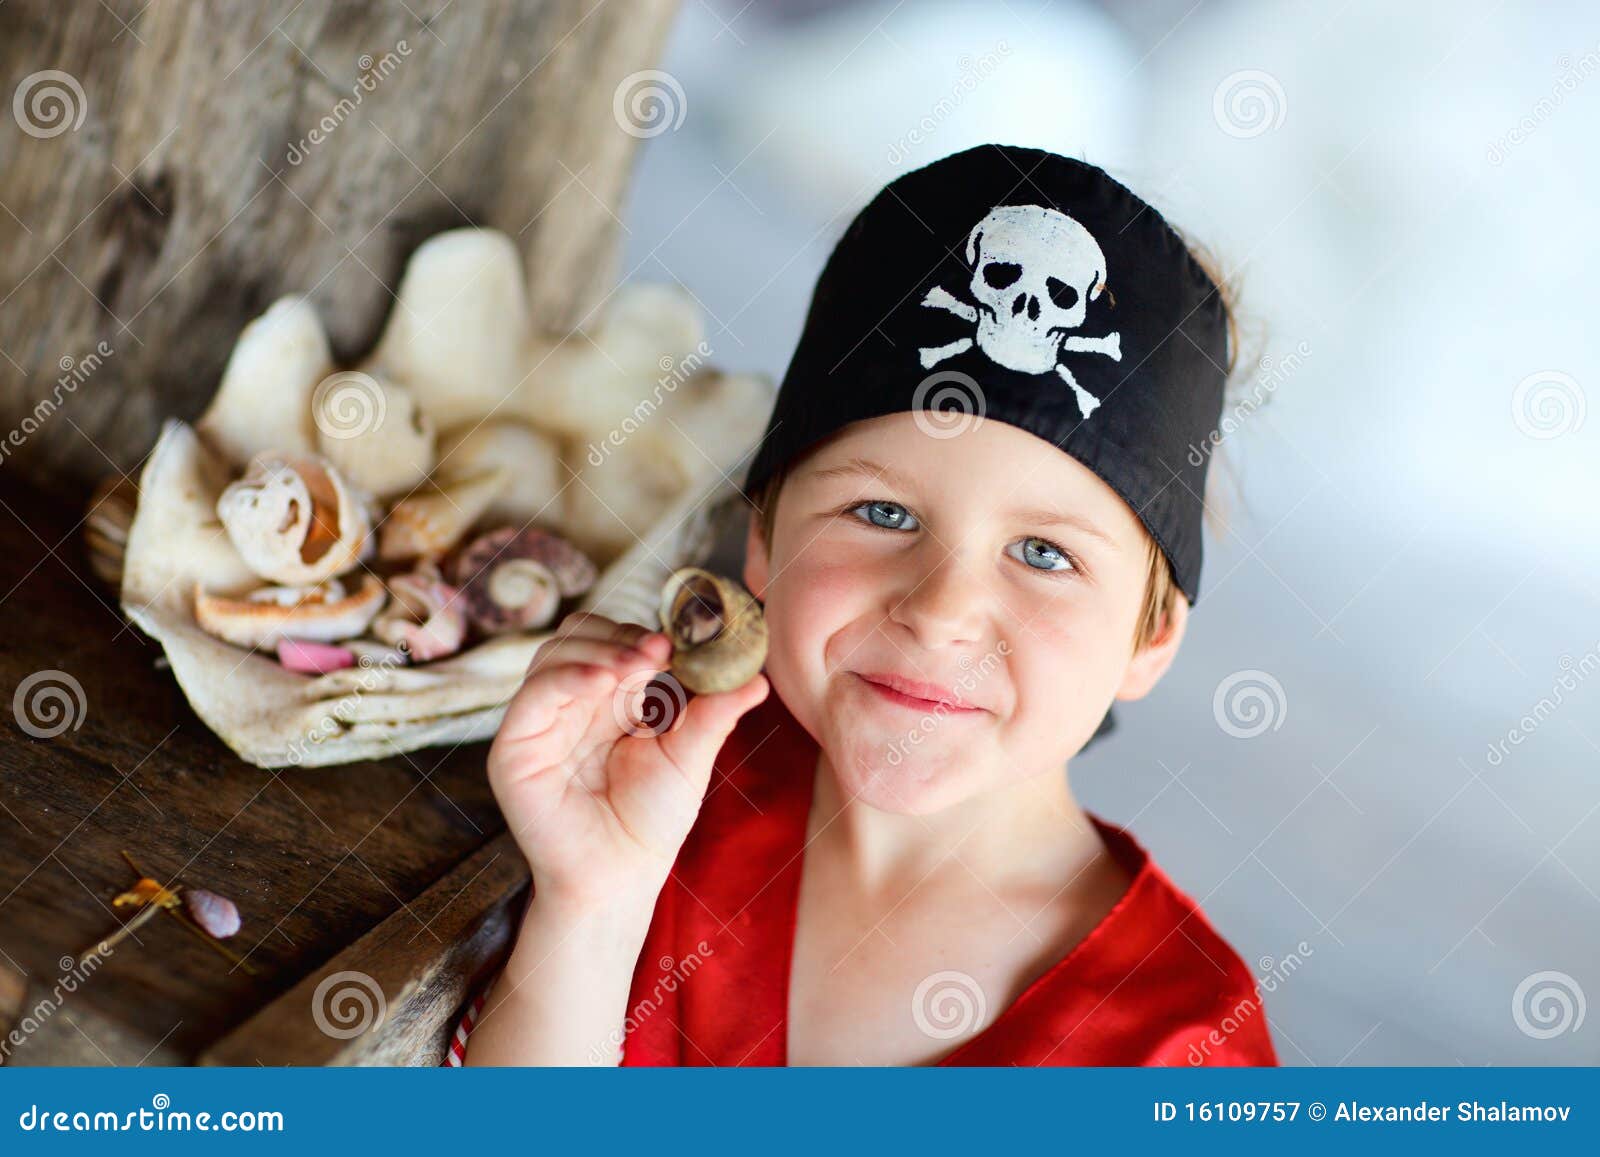 portrait of playful pirate boy